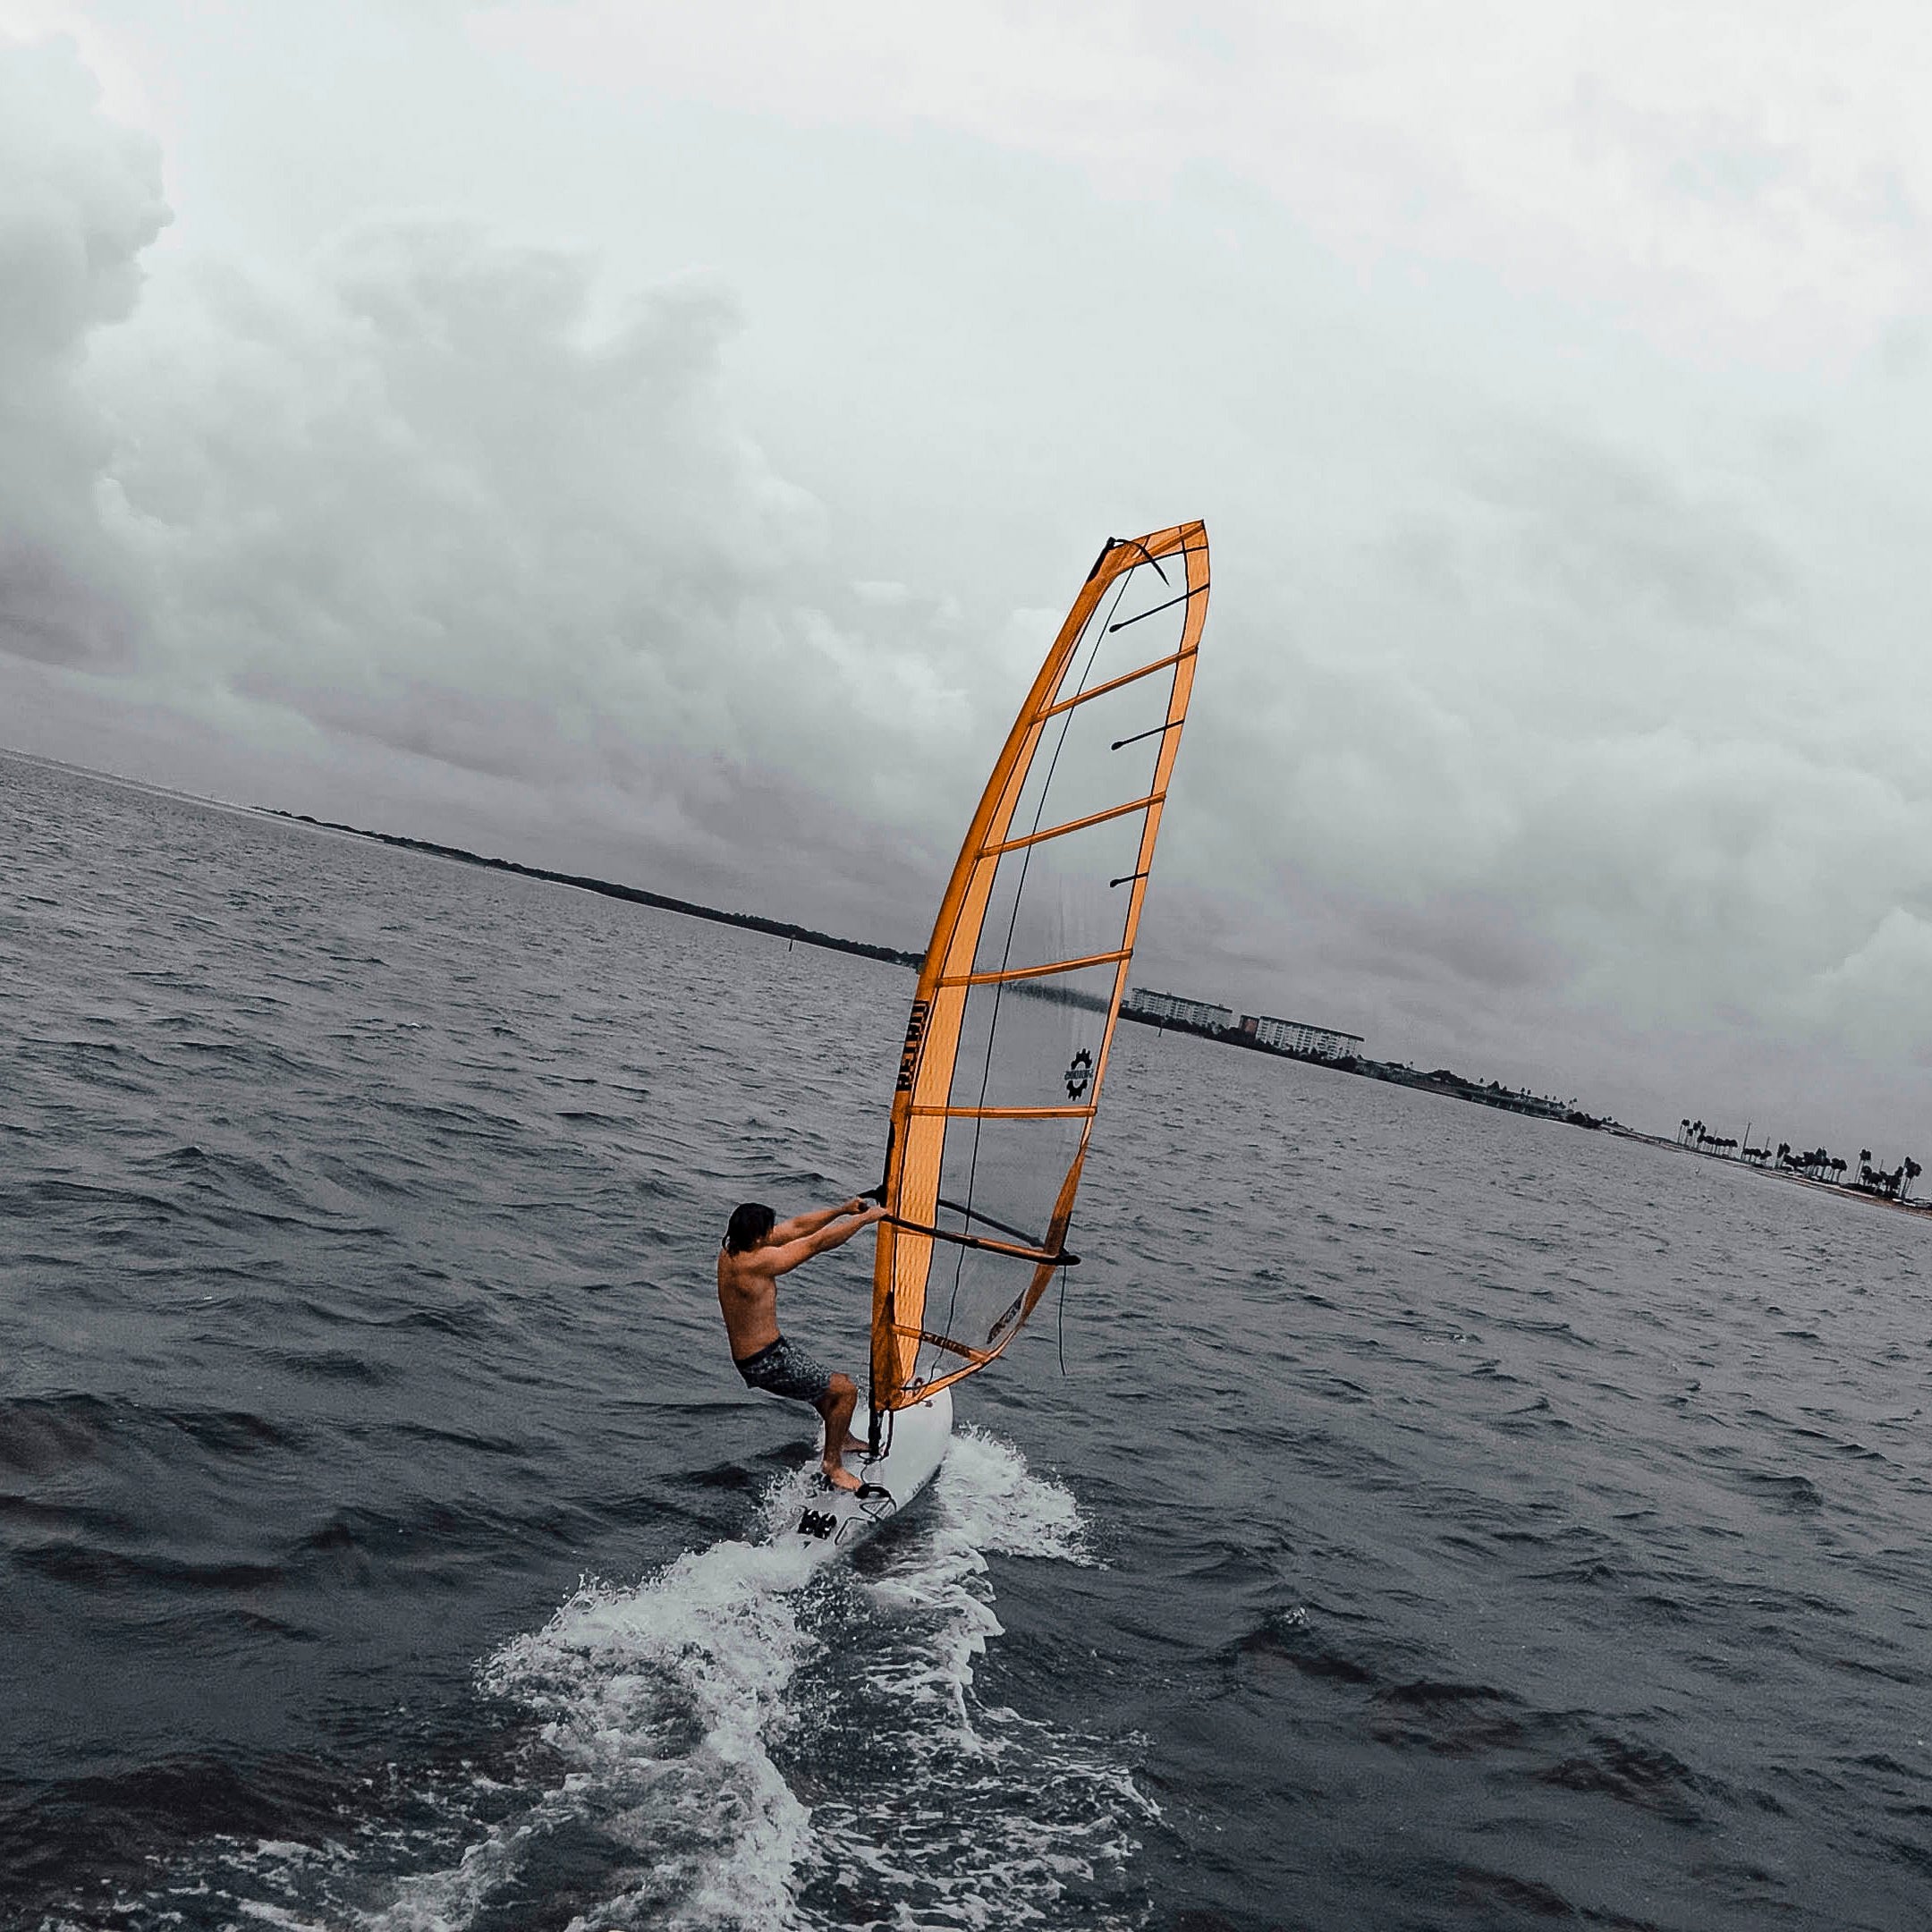 Exhilarating high-speed FPV Capture of a windsurfer 